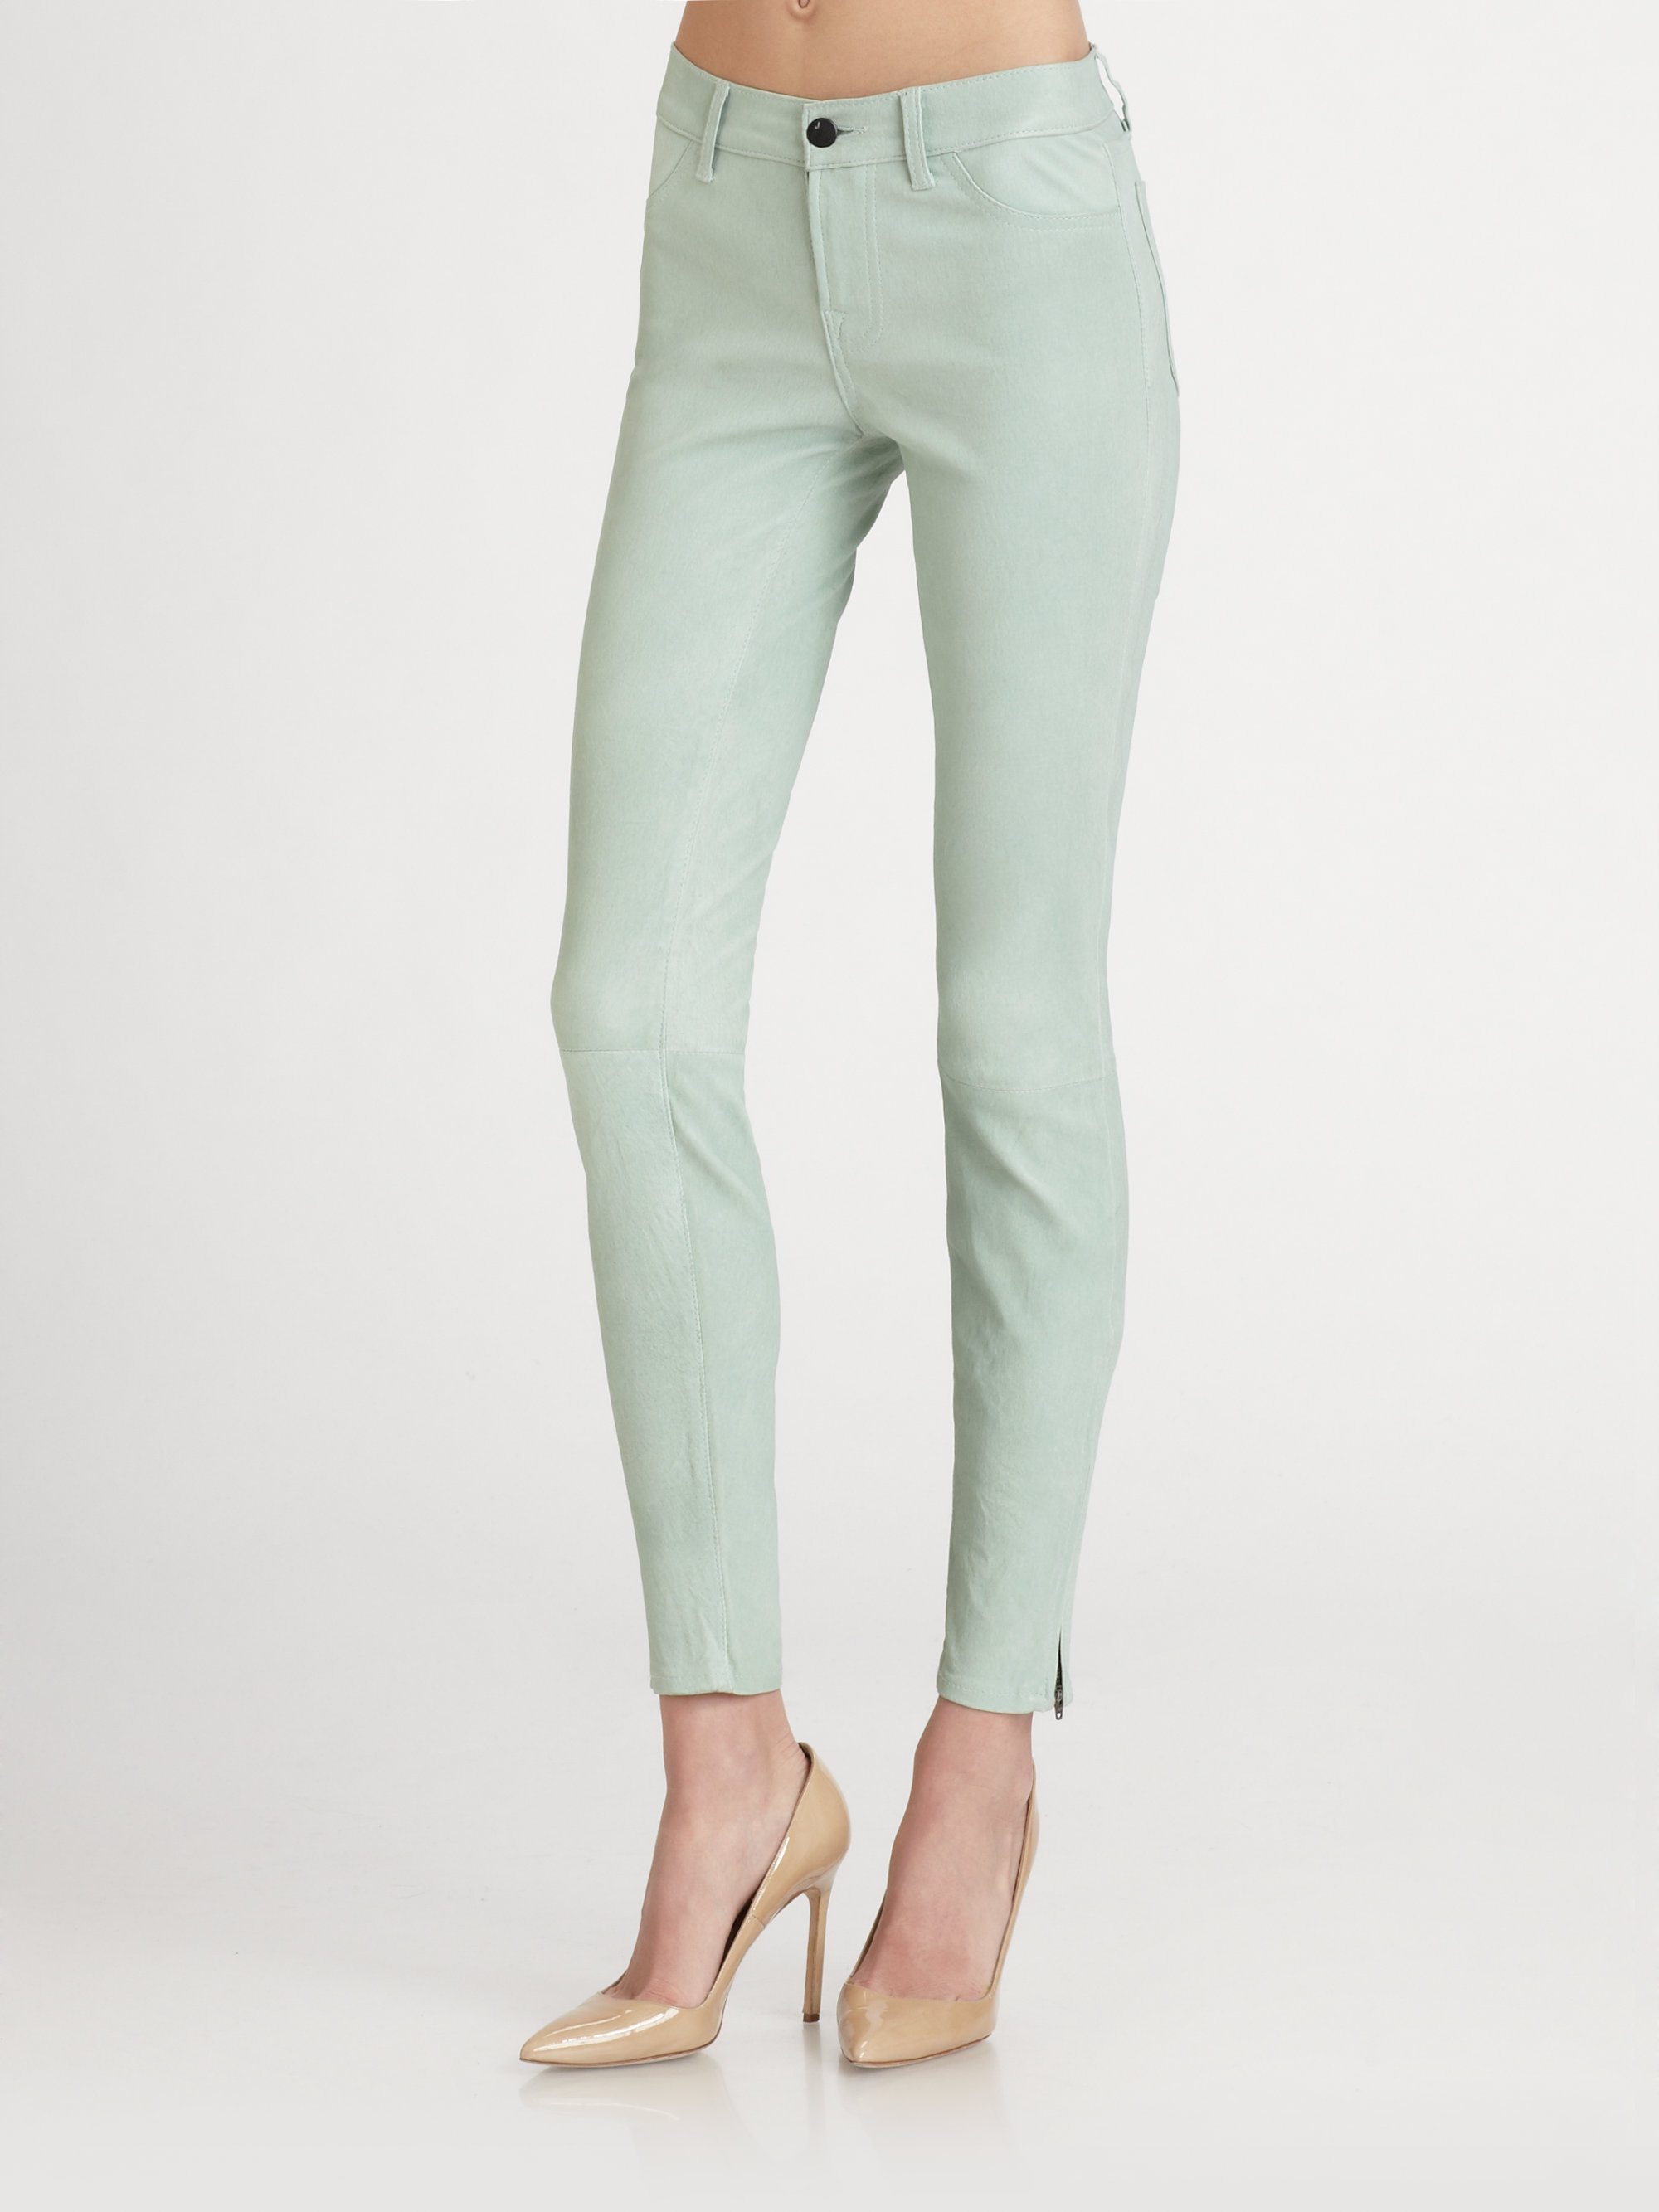 J Brand Leather Skinny Pants in Mint (Green) - Lyst